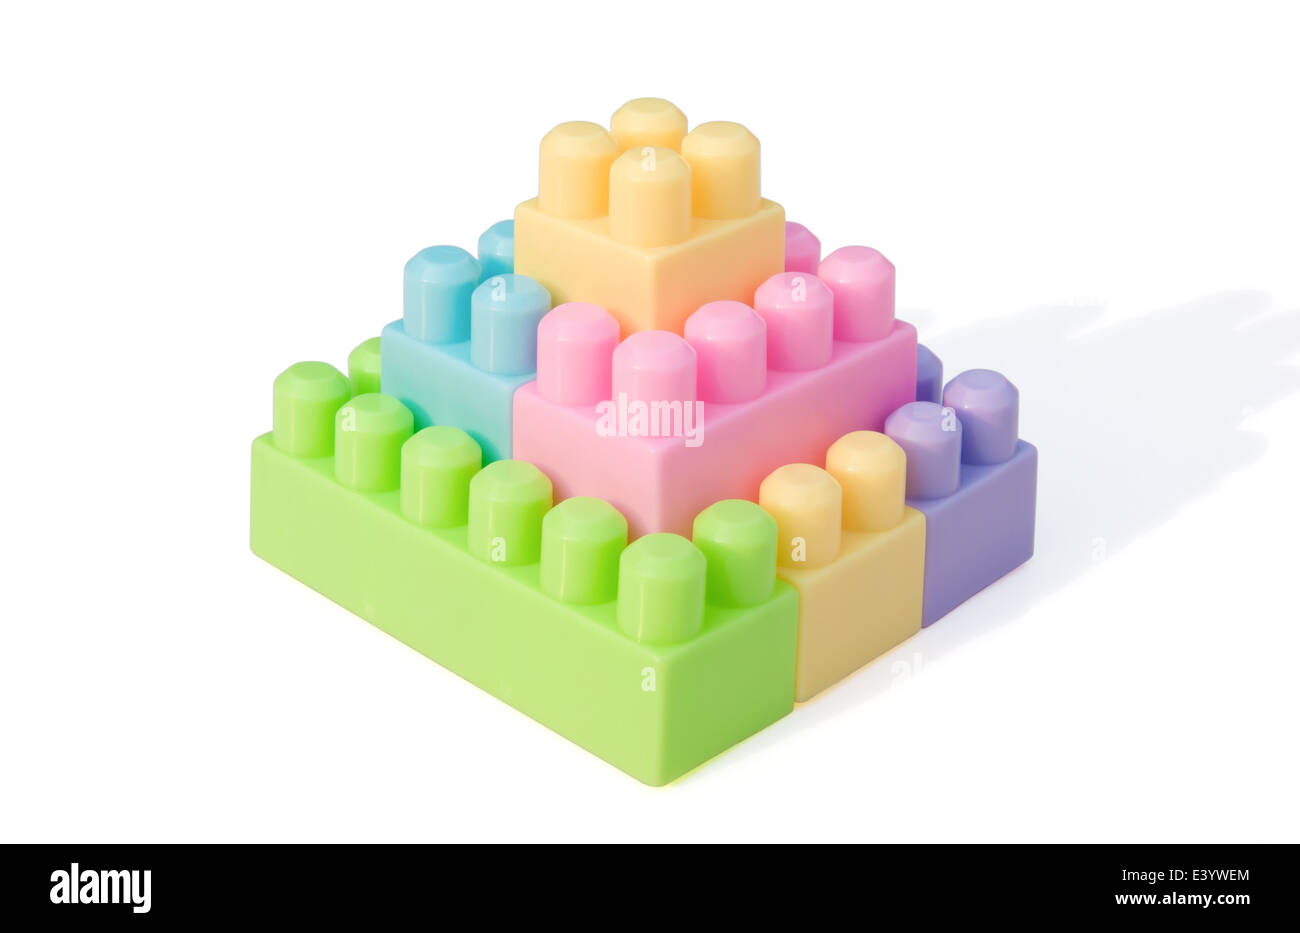 pyramid shape toy bricks with clipping path Stock Photo